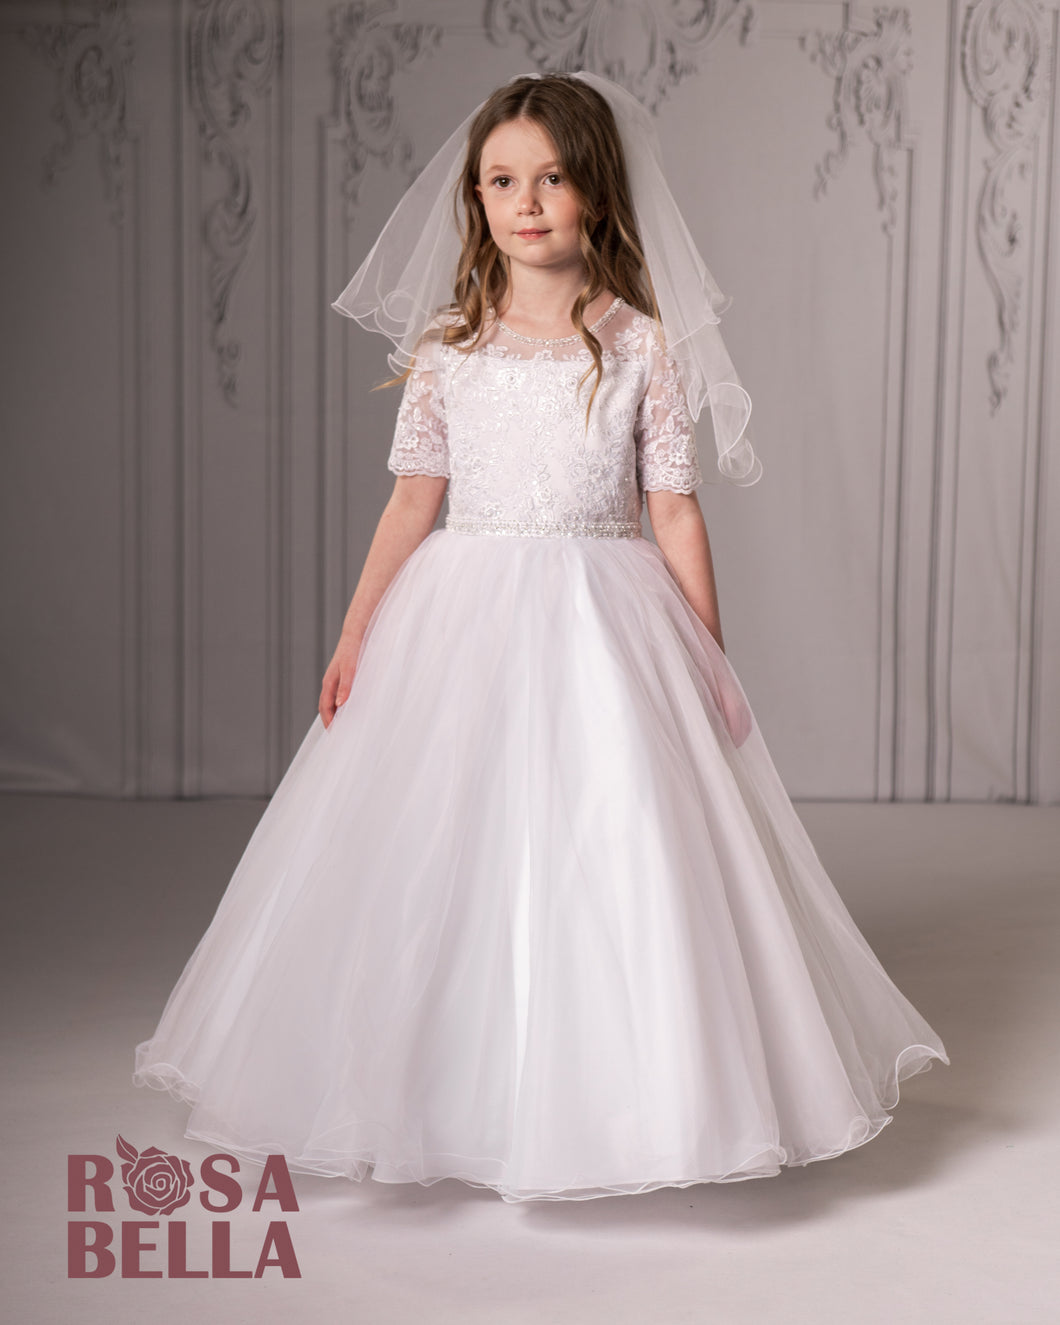 Rosa Bella By Sweetie Pie Girls White Communion Dress:- RB641